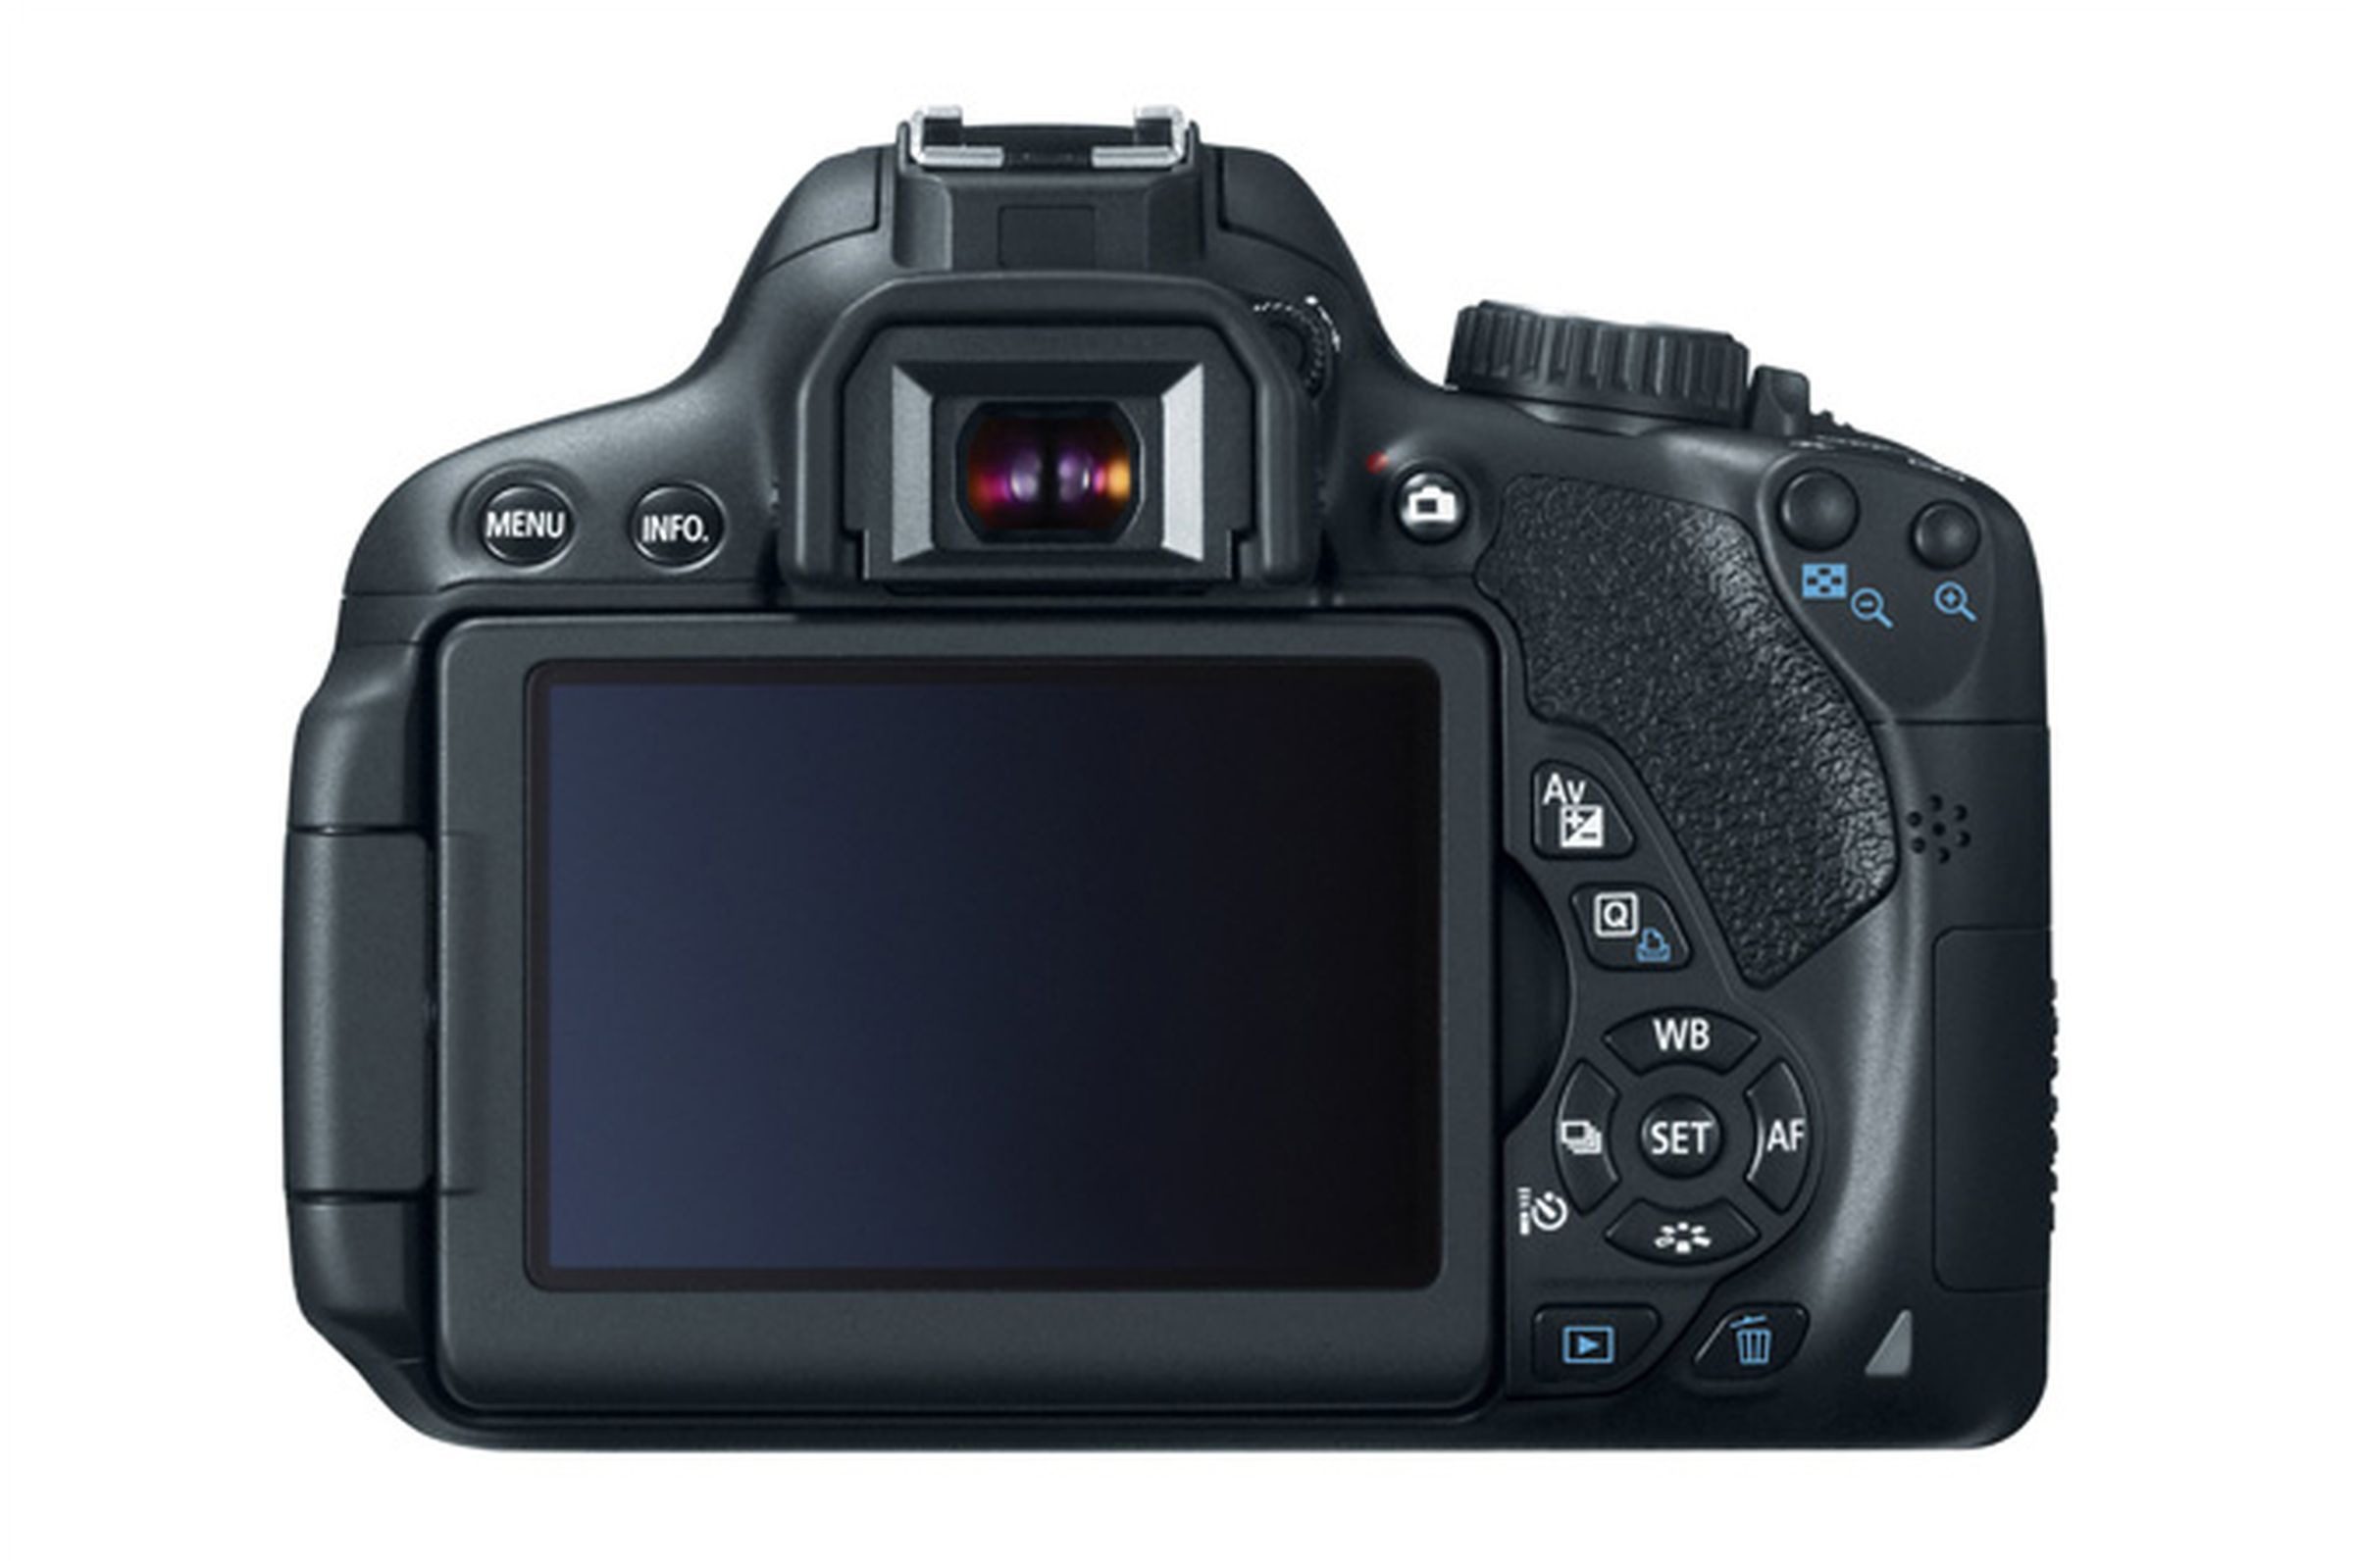 Canon EOS Rebel T4i press images